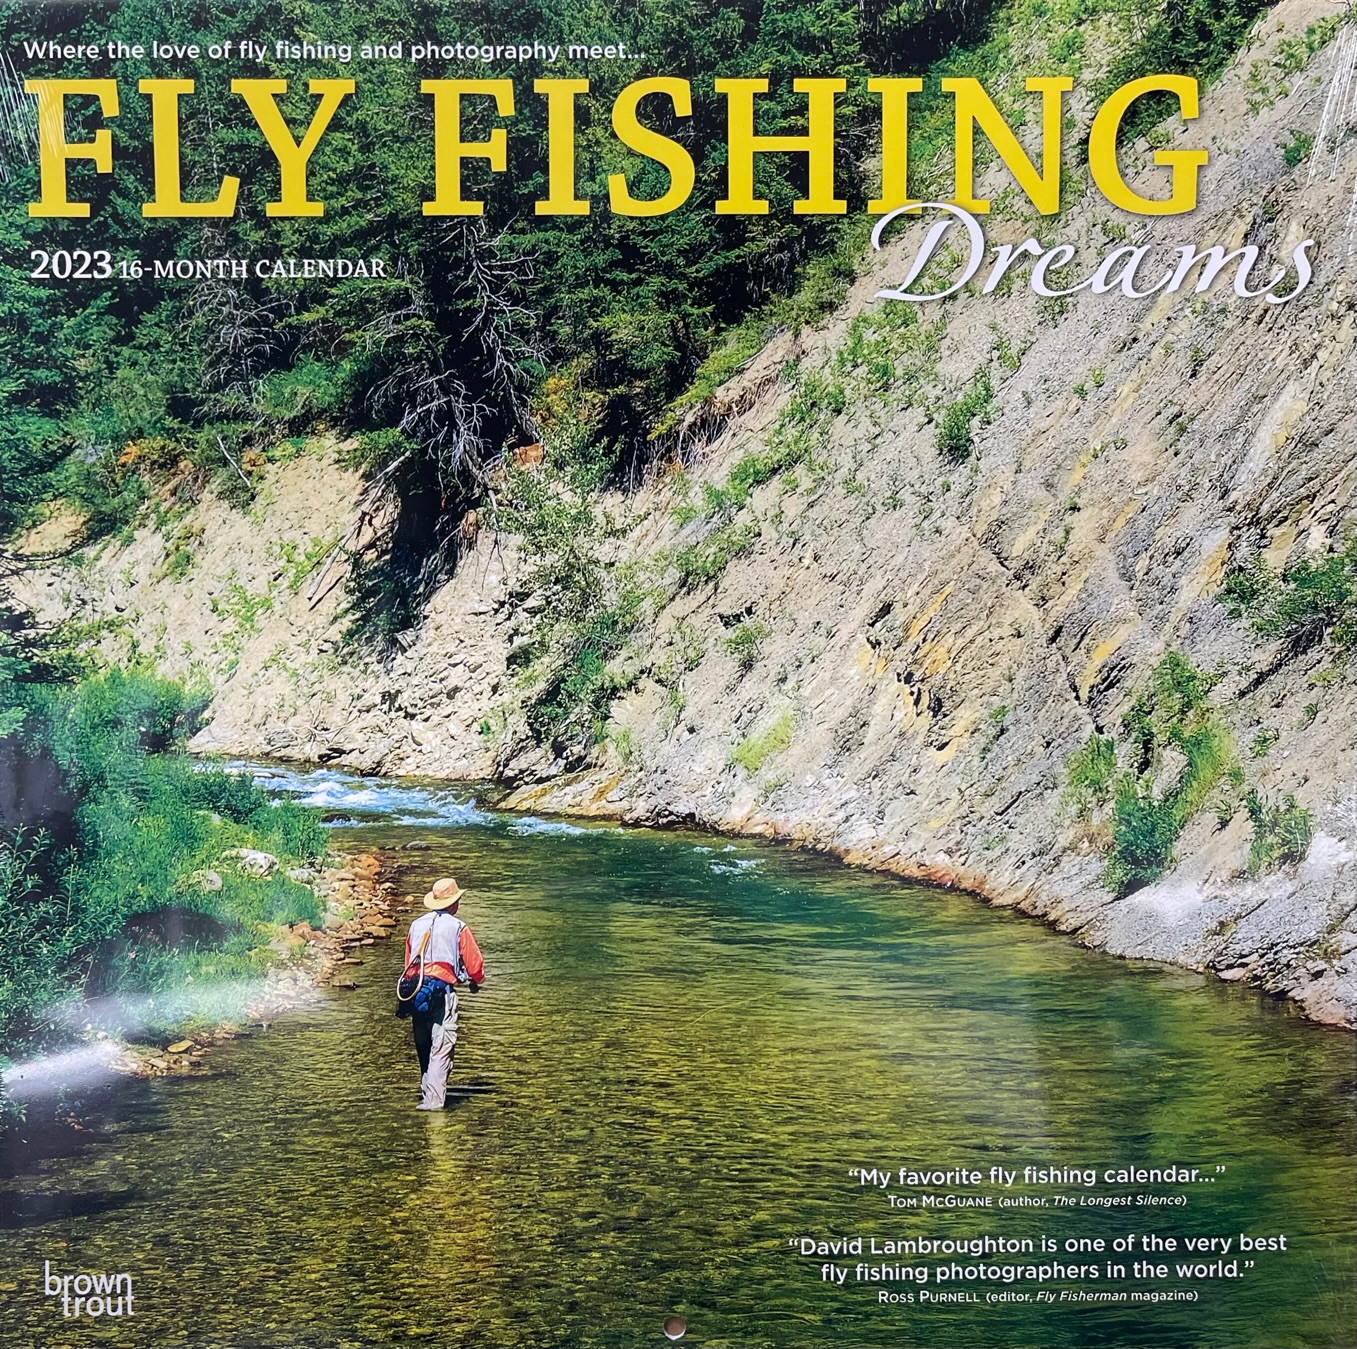 Fly Fishing Dreams 16-Month Calendar